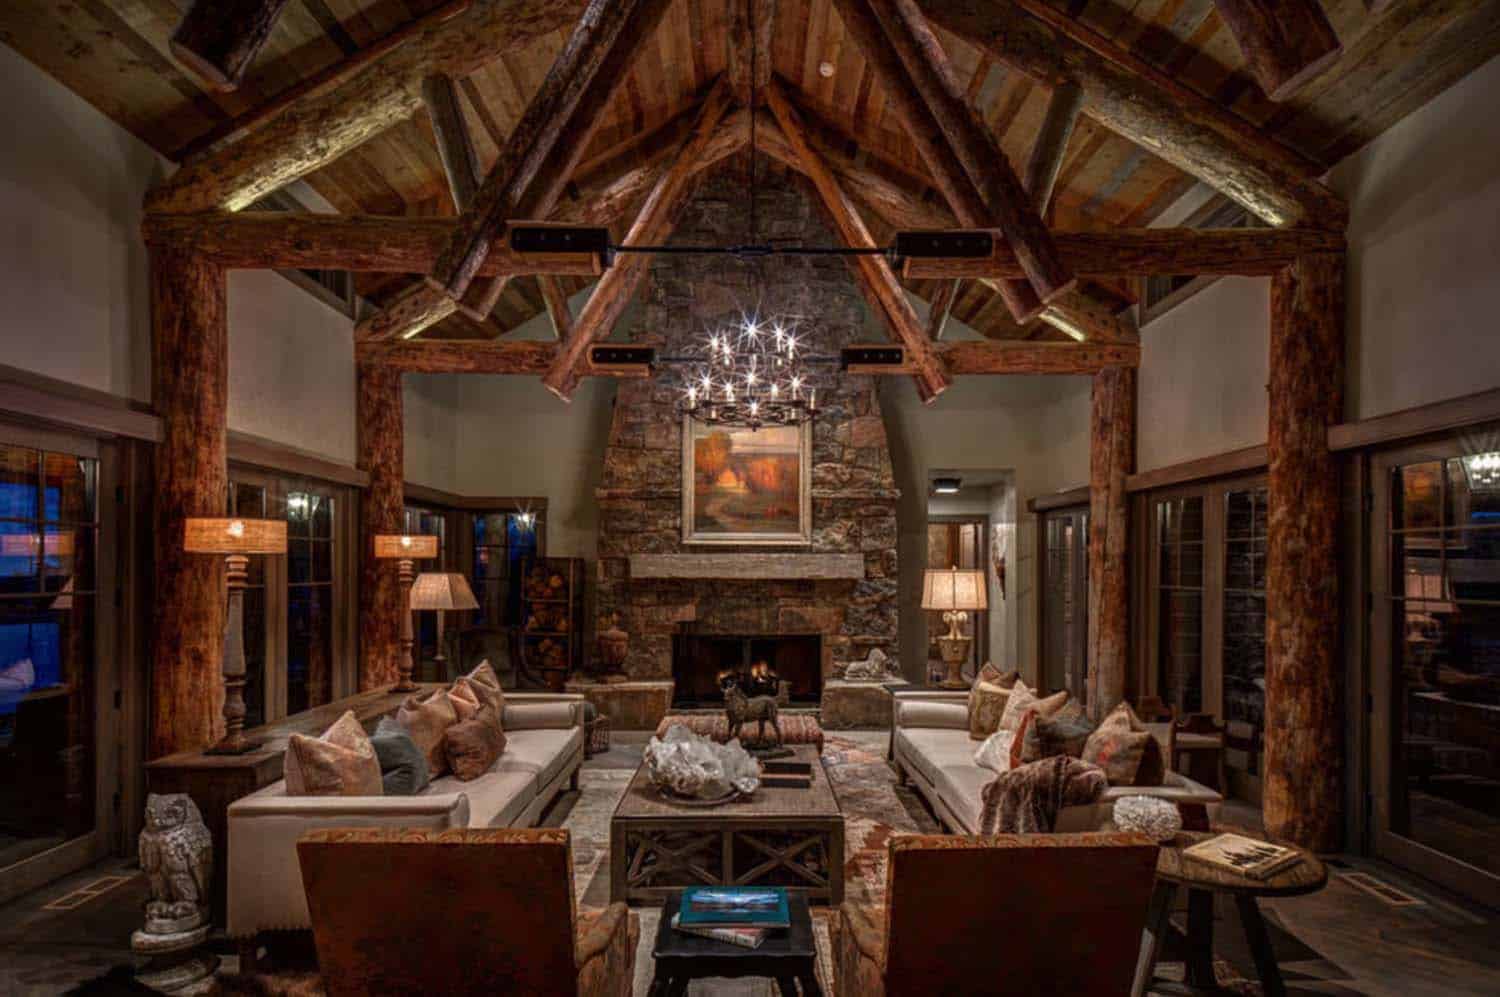 Utah mountain residence features a rustic yet elegant atmosphere